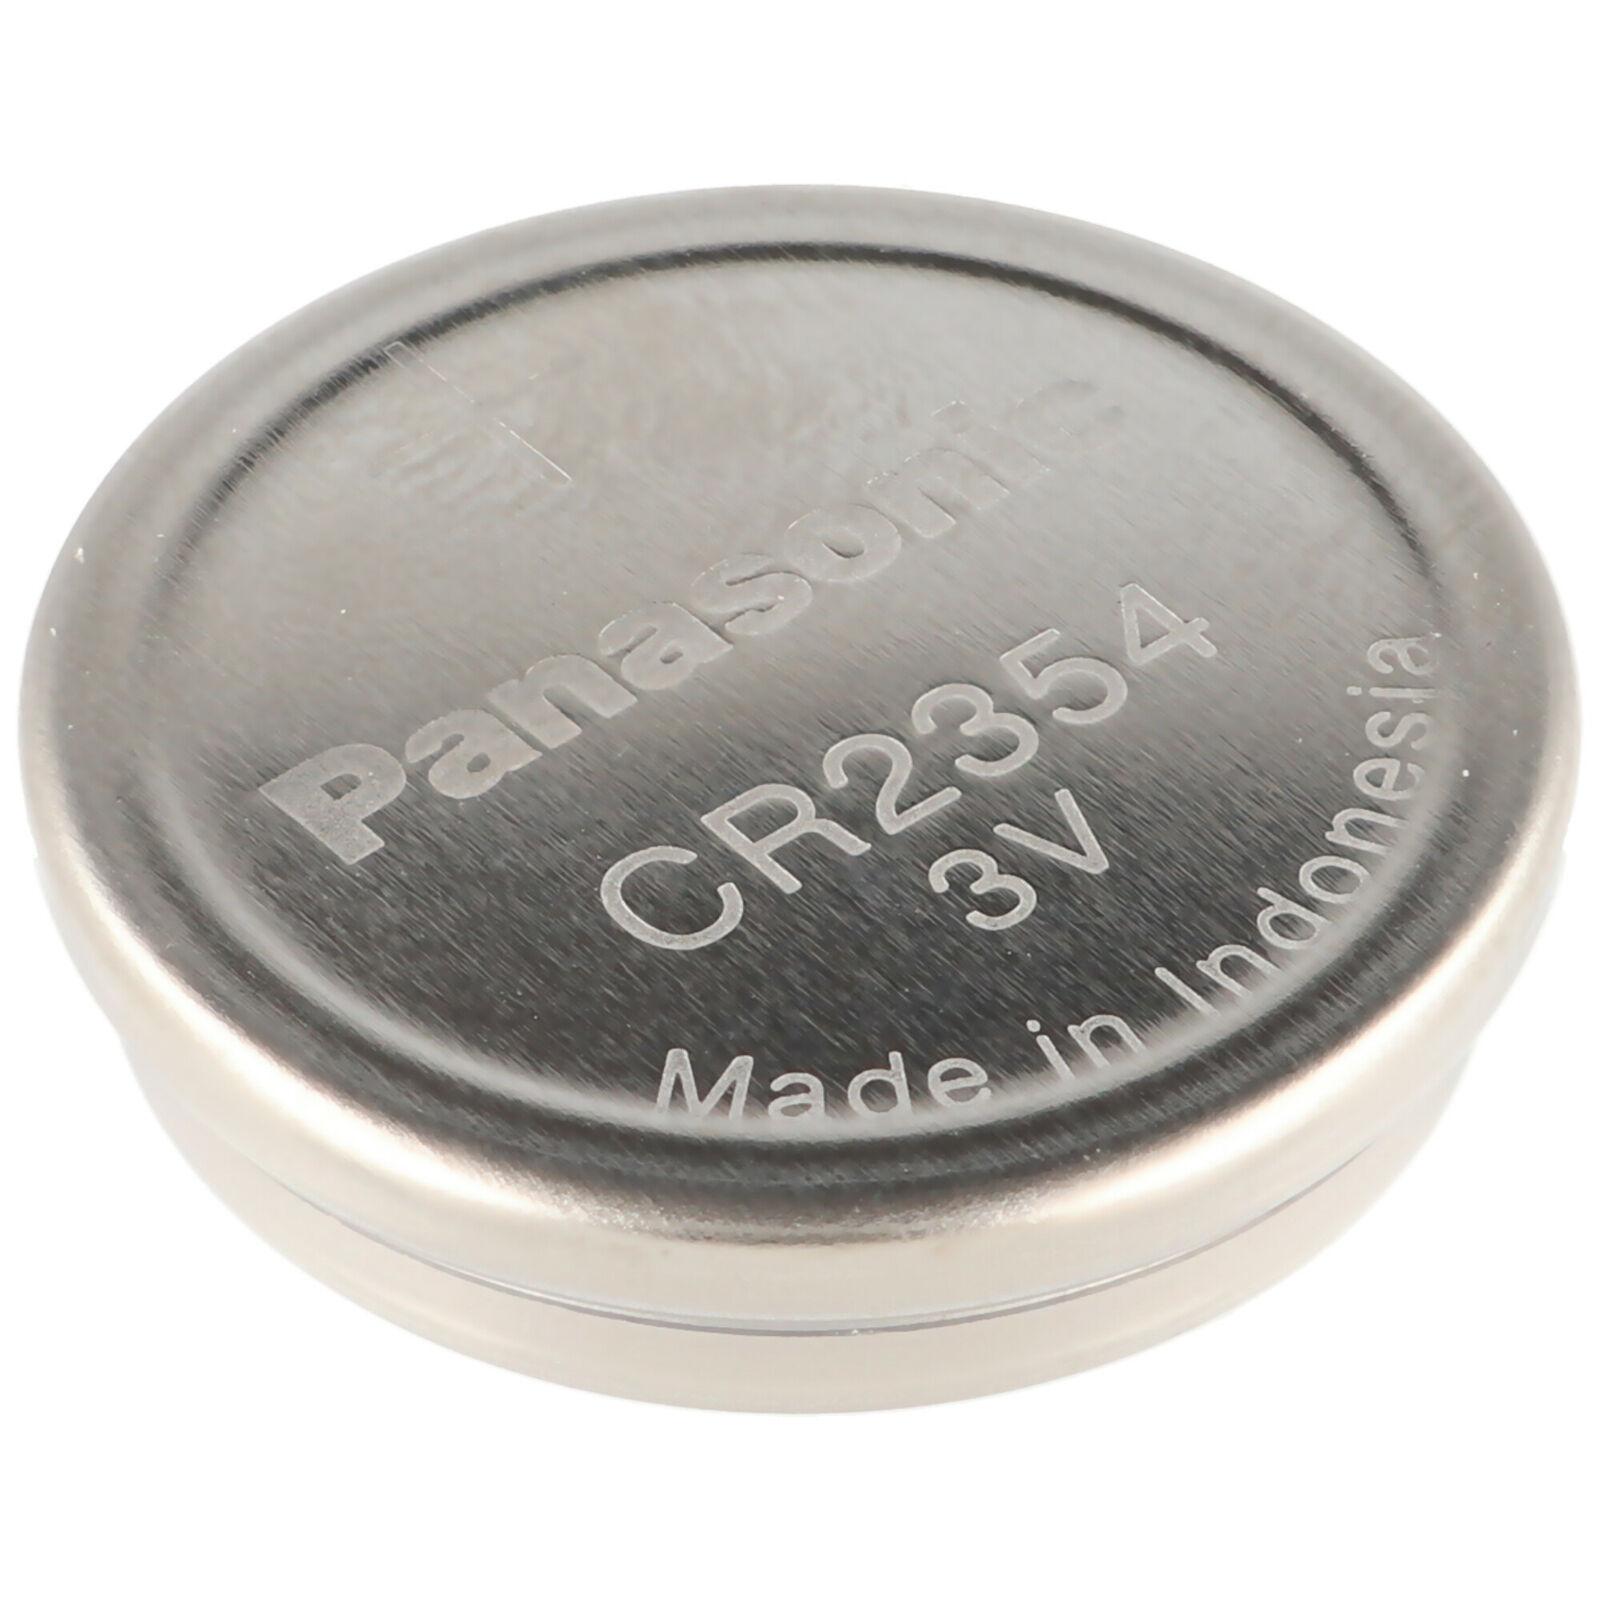 Baterie Panasonic CR2354, Lithium, 3V, 64ks